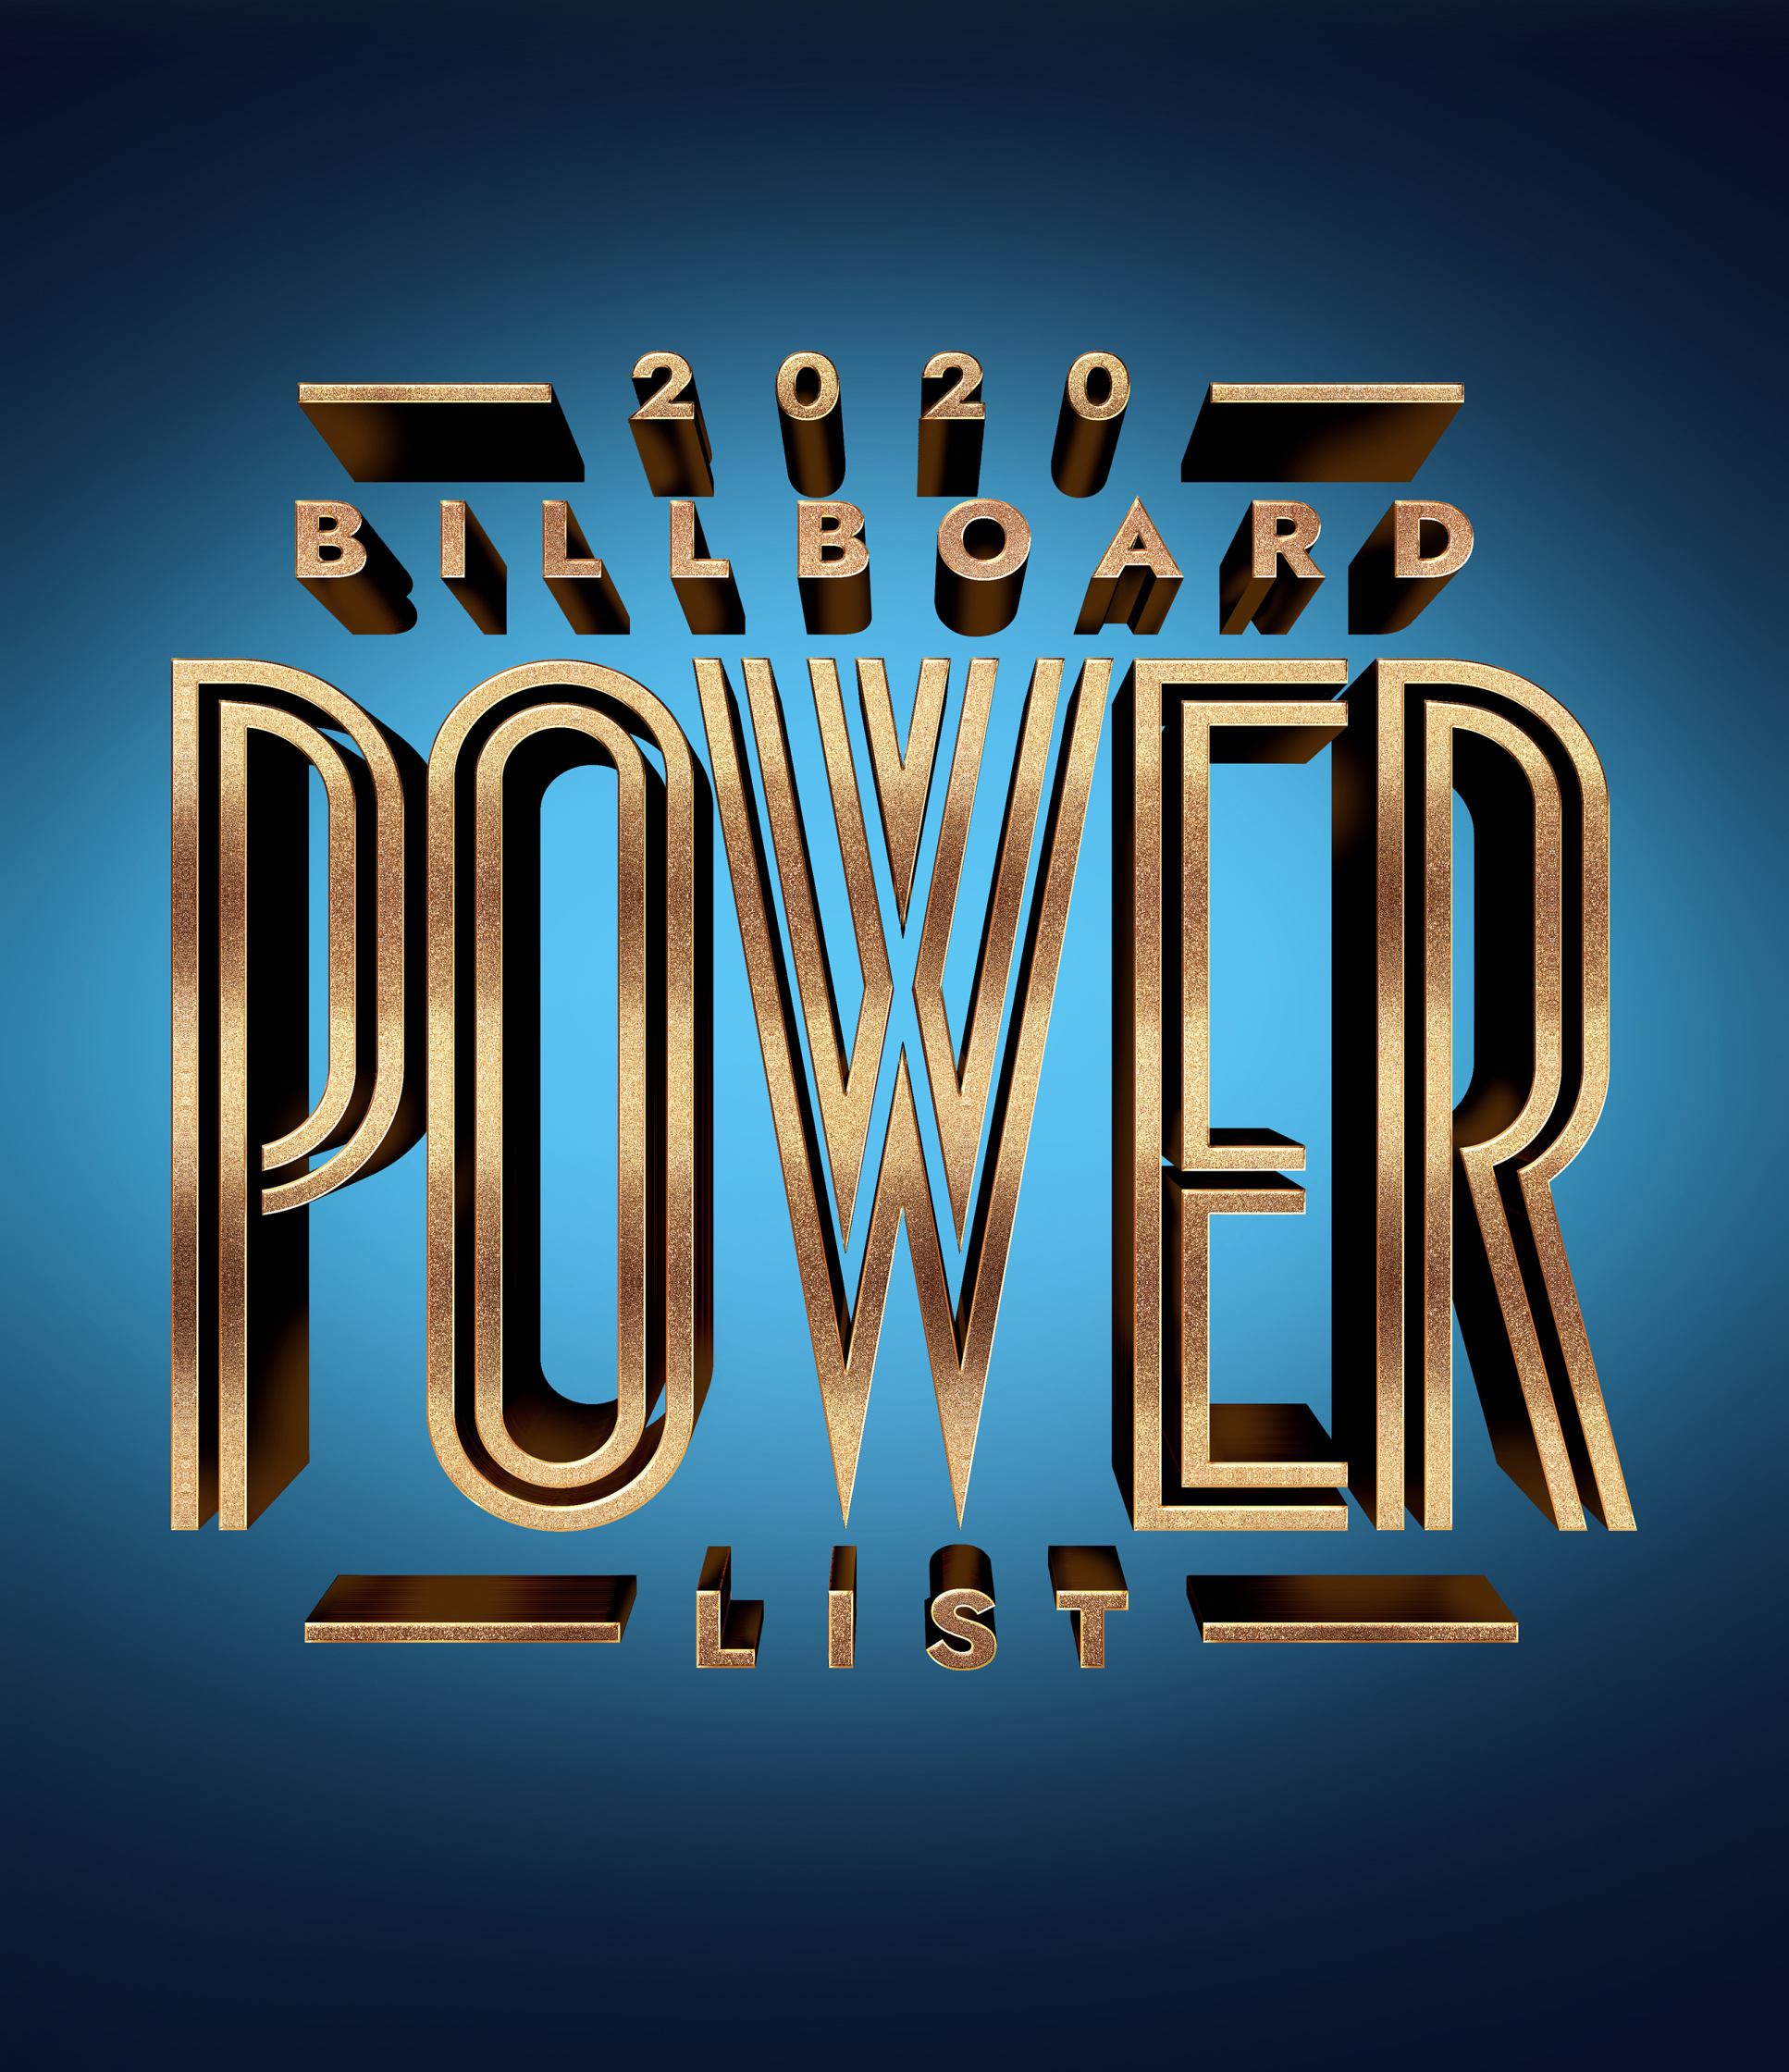 Billboard_Power_List_2020_RGB.jpg